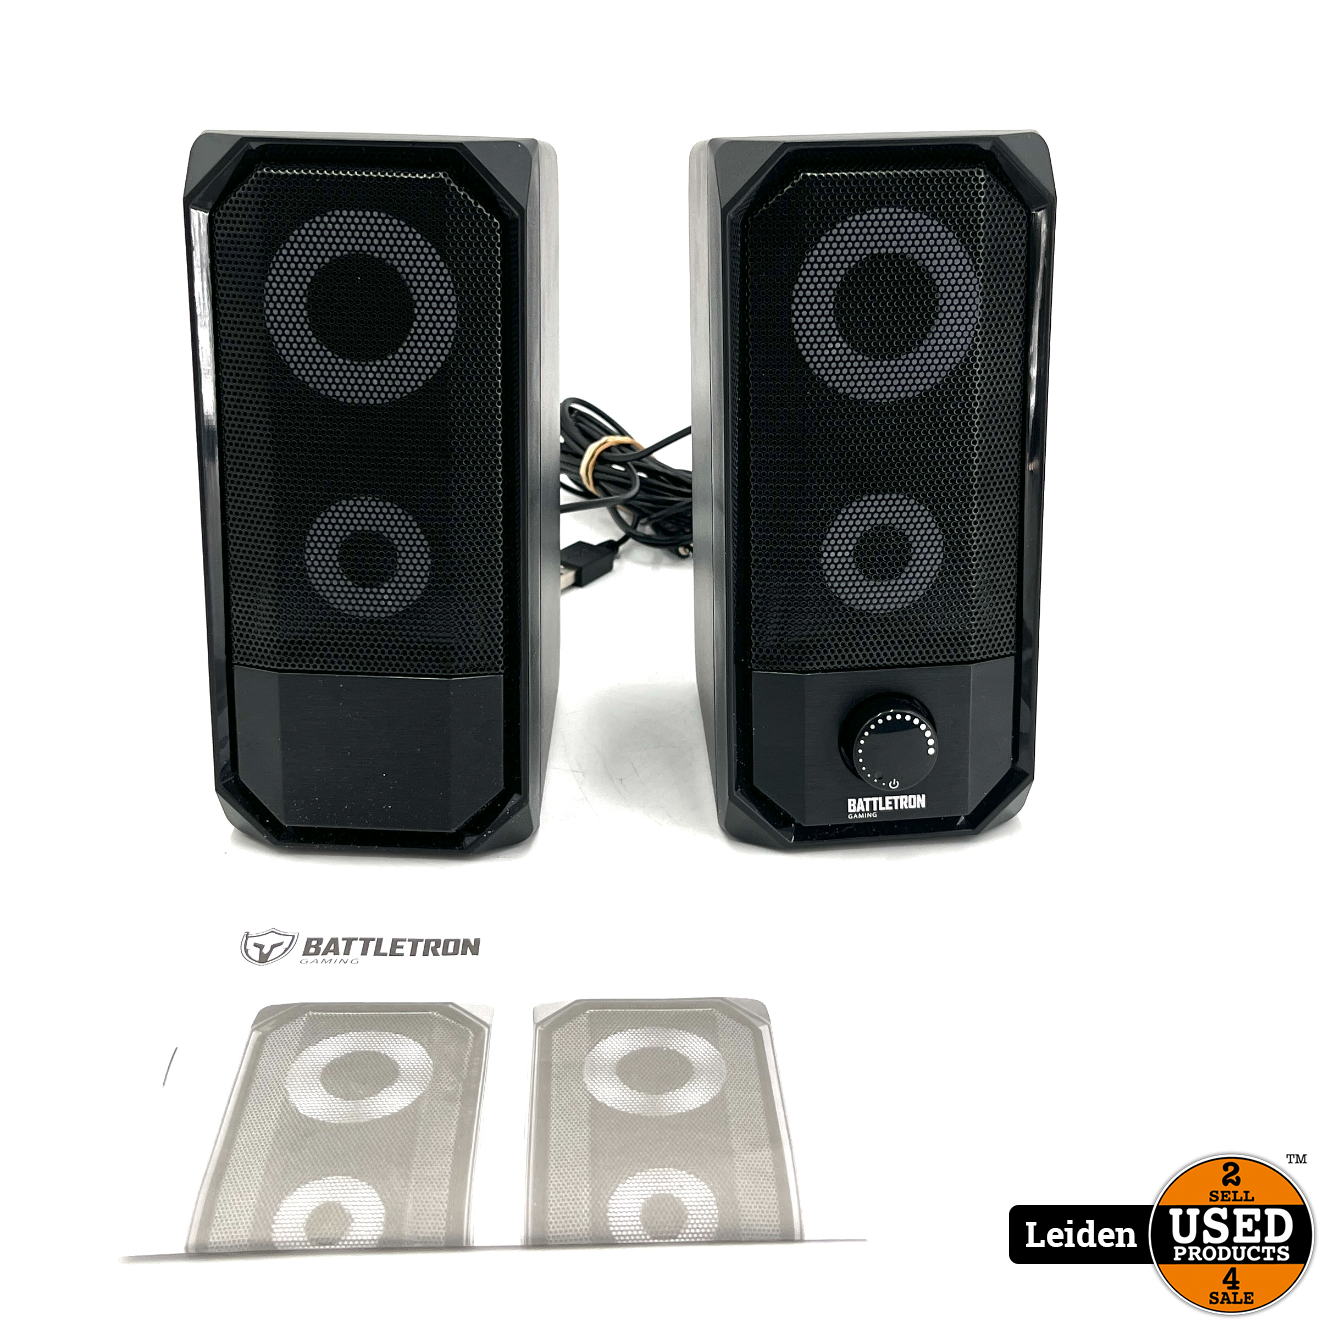 mot Kinderdag inrichting Battletron - gaming speakers - met verlichting - Jack,USB - 10 x 8 x 17 cm  - Used Products Leiden